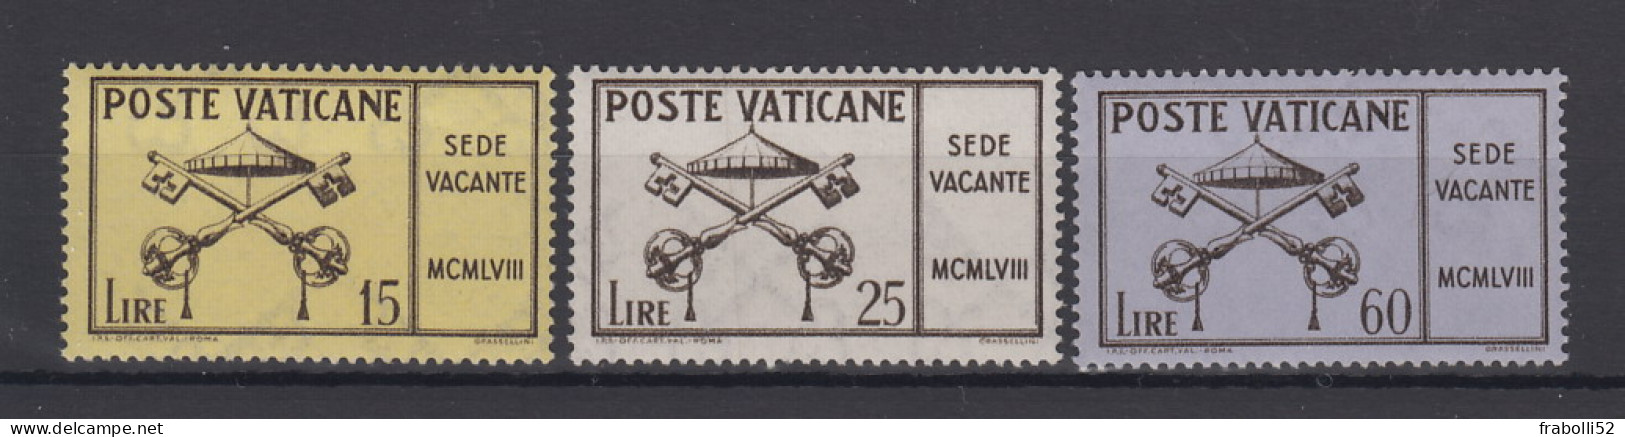 Vaticano Nuovi:  Giovanni XXIII - Giro  Completo 1958-1963 - Sammlungen